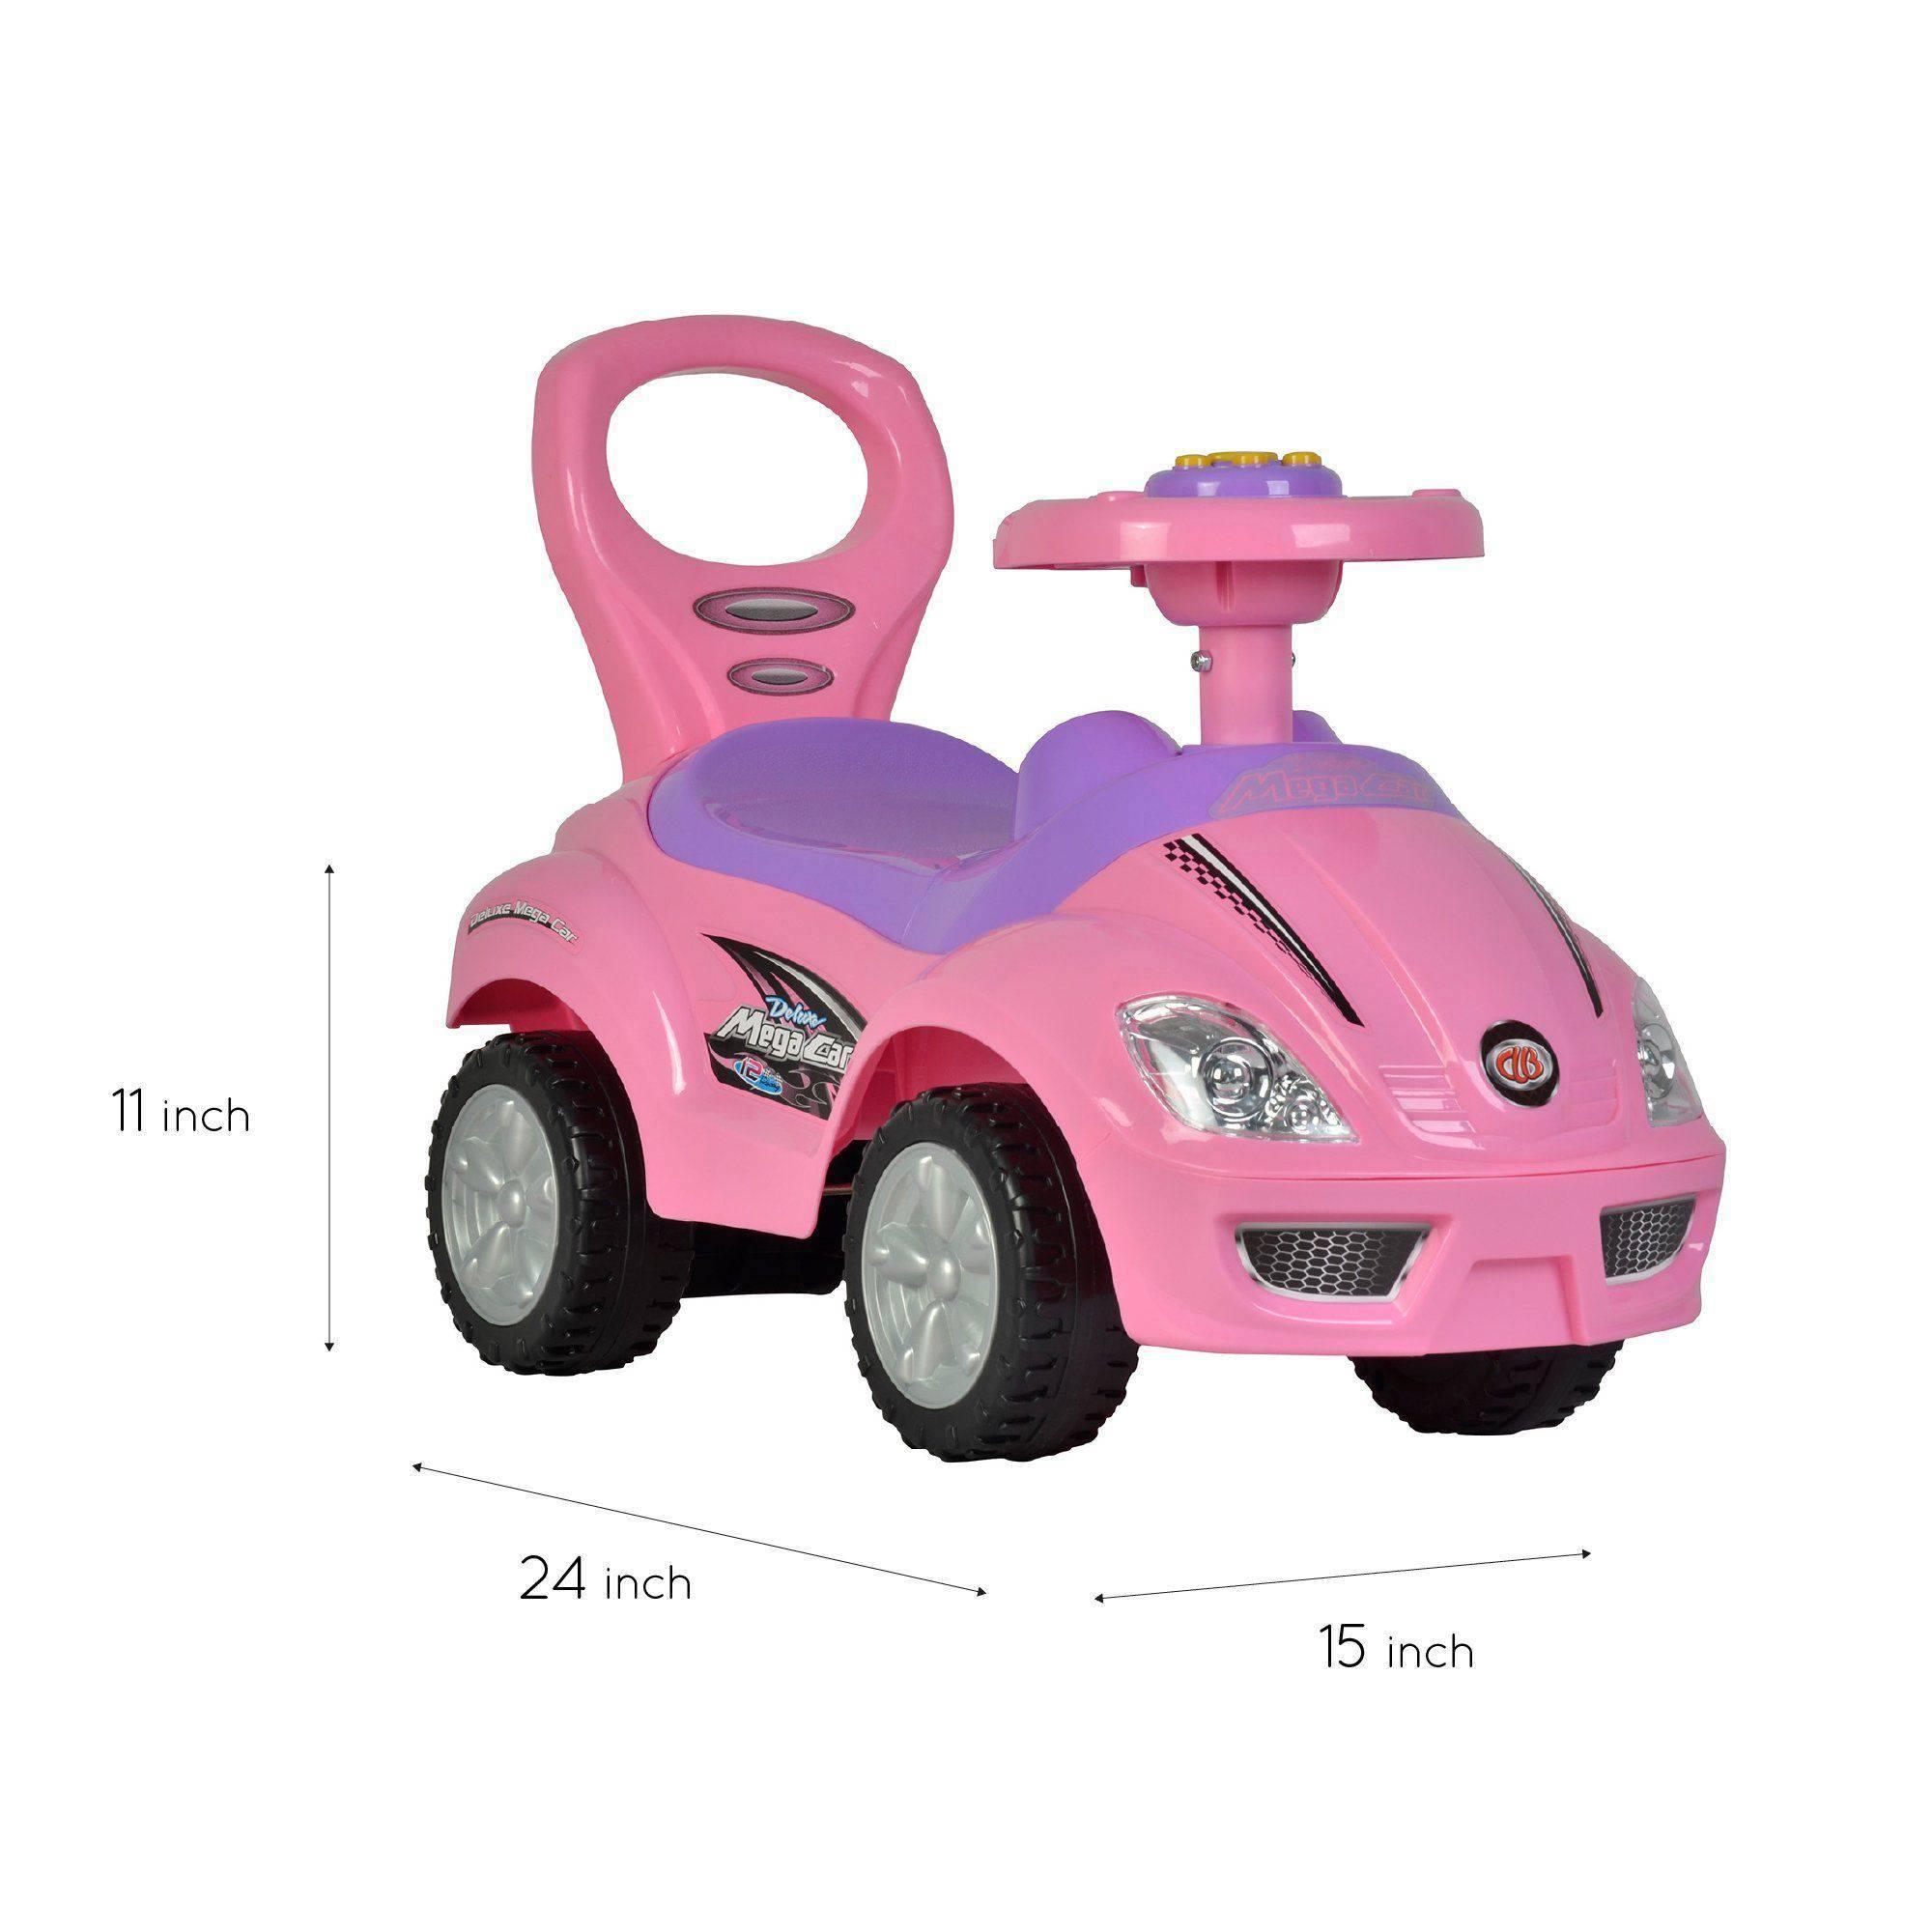 Freddo Toys Deluxe Ride on Car & Push car - American Kids Cars